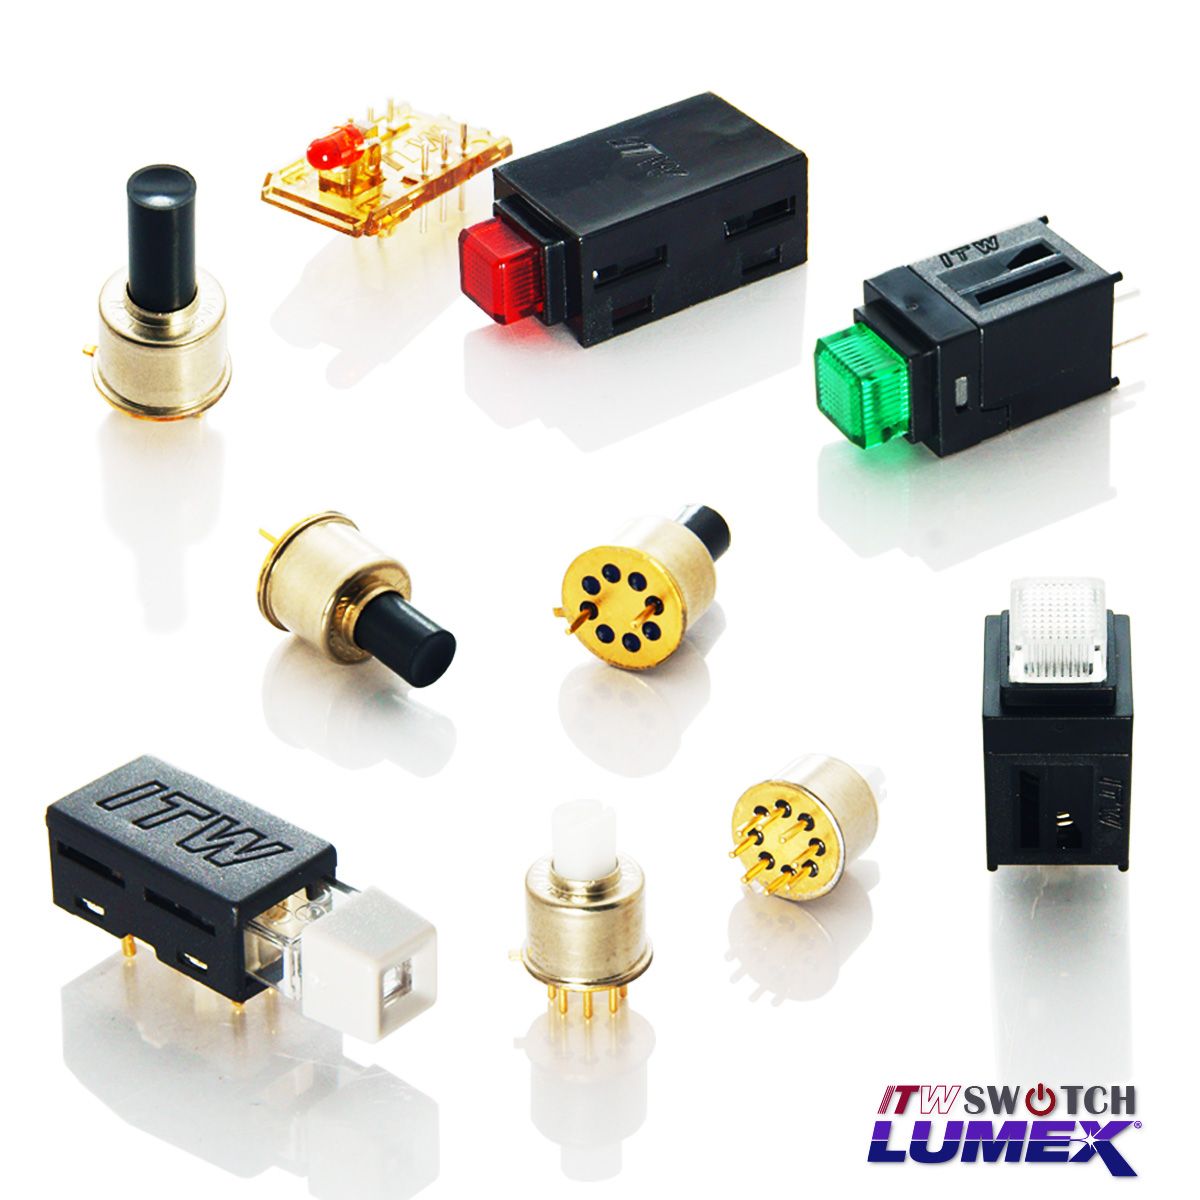 ITW Lumex Switchيوفر مفاتيح زر ضغط مضاءة LED مصغرة لتطبيقات PCBA.